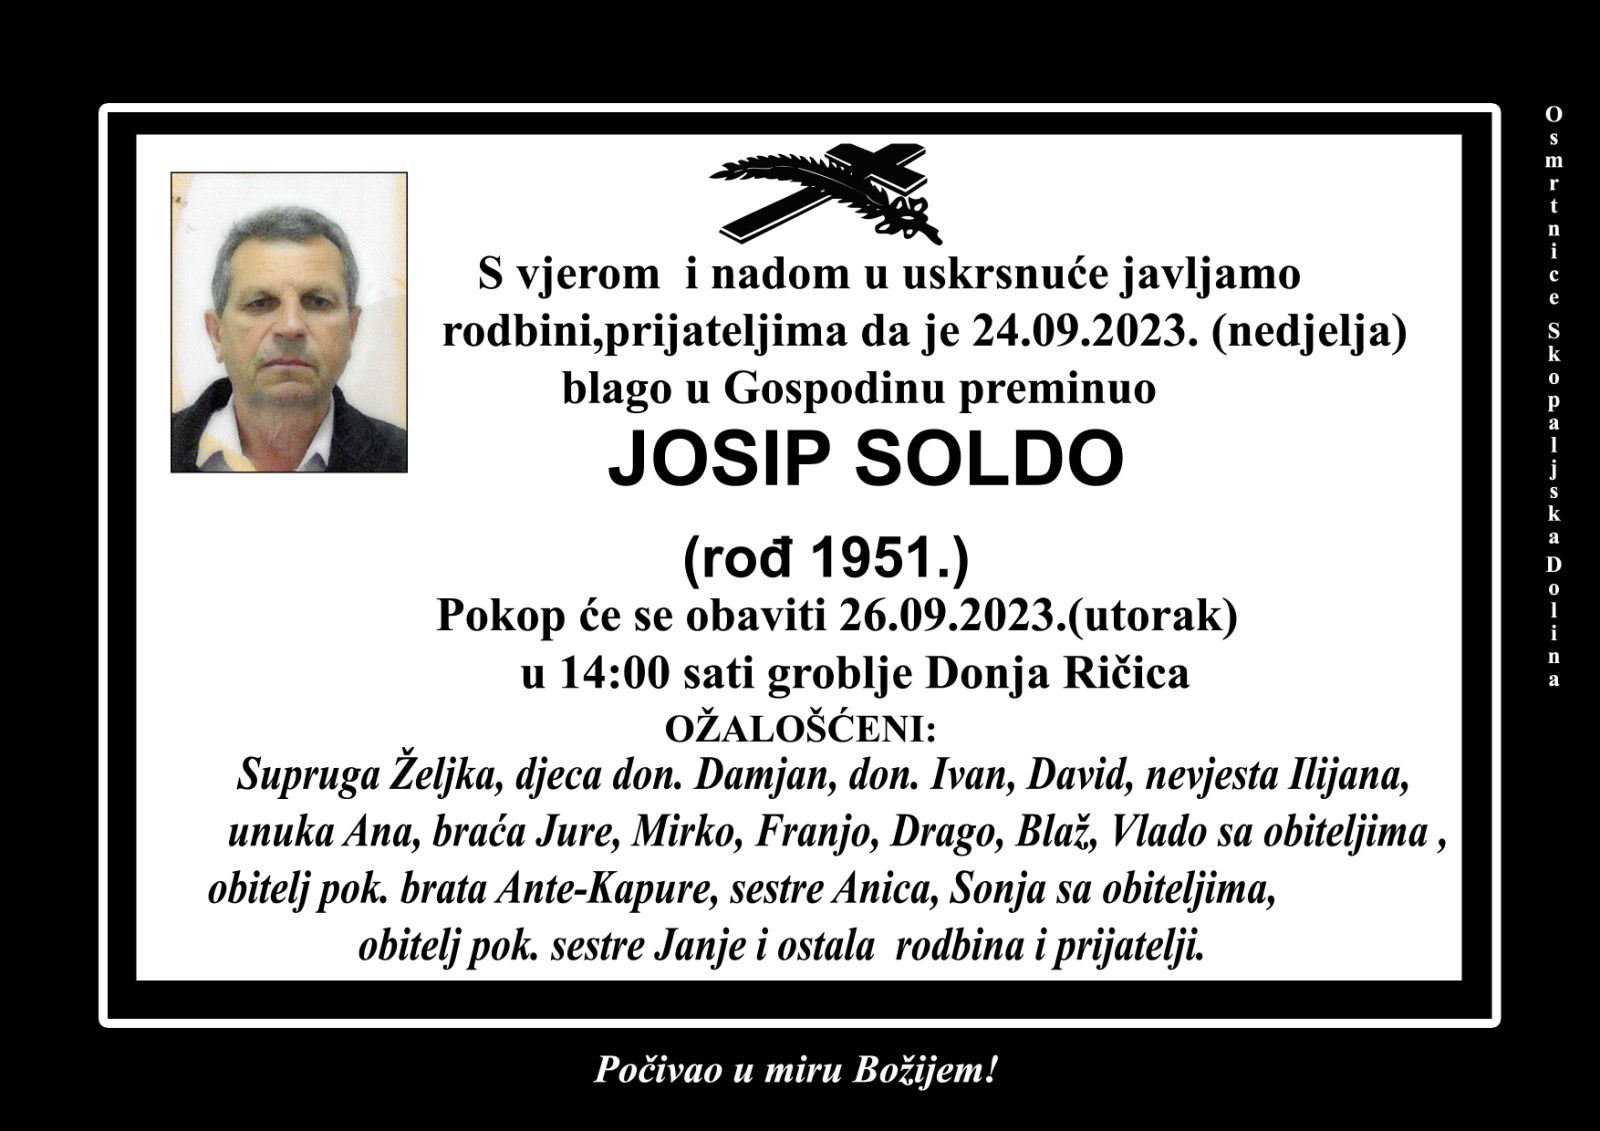 Josip Soldo